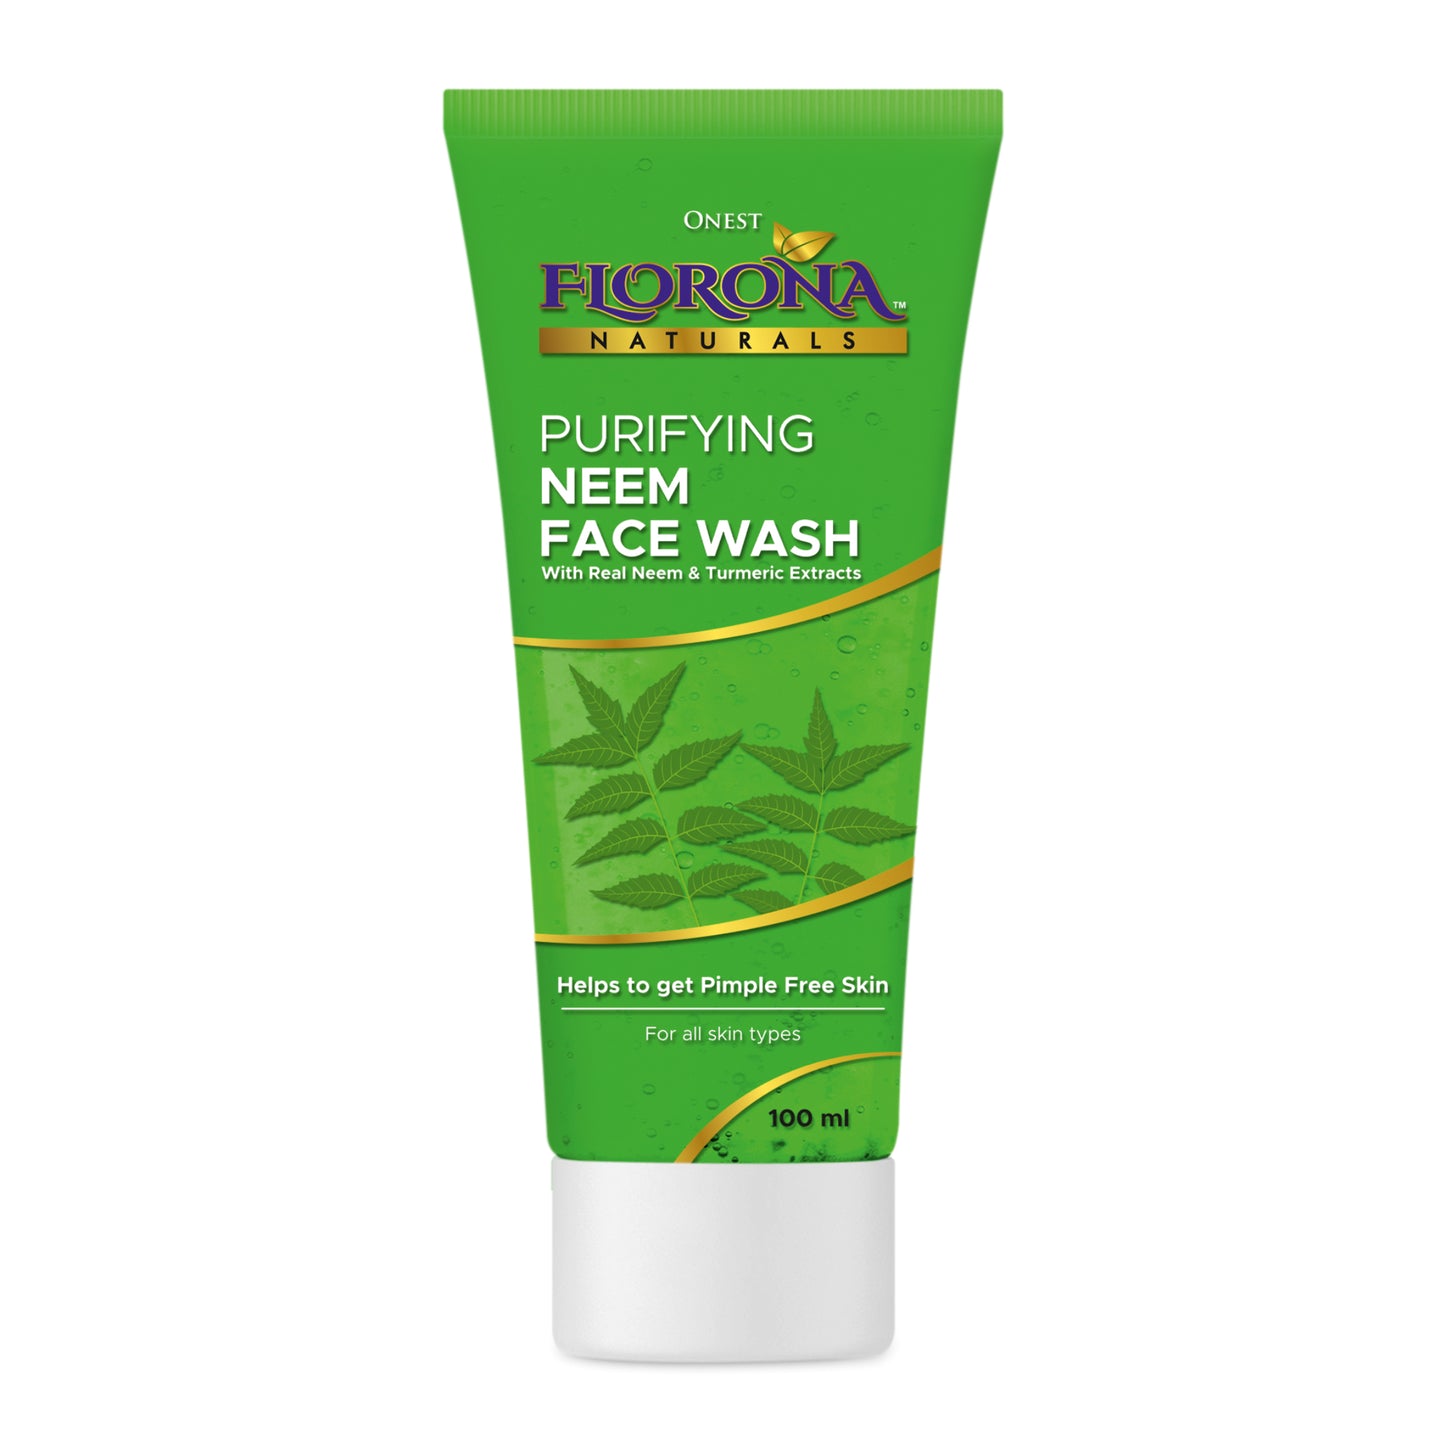 Florona Naturals Purifying Neem Face Wash 100ml